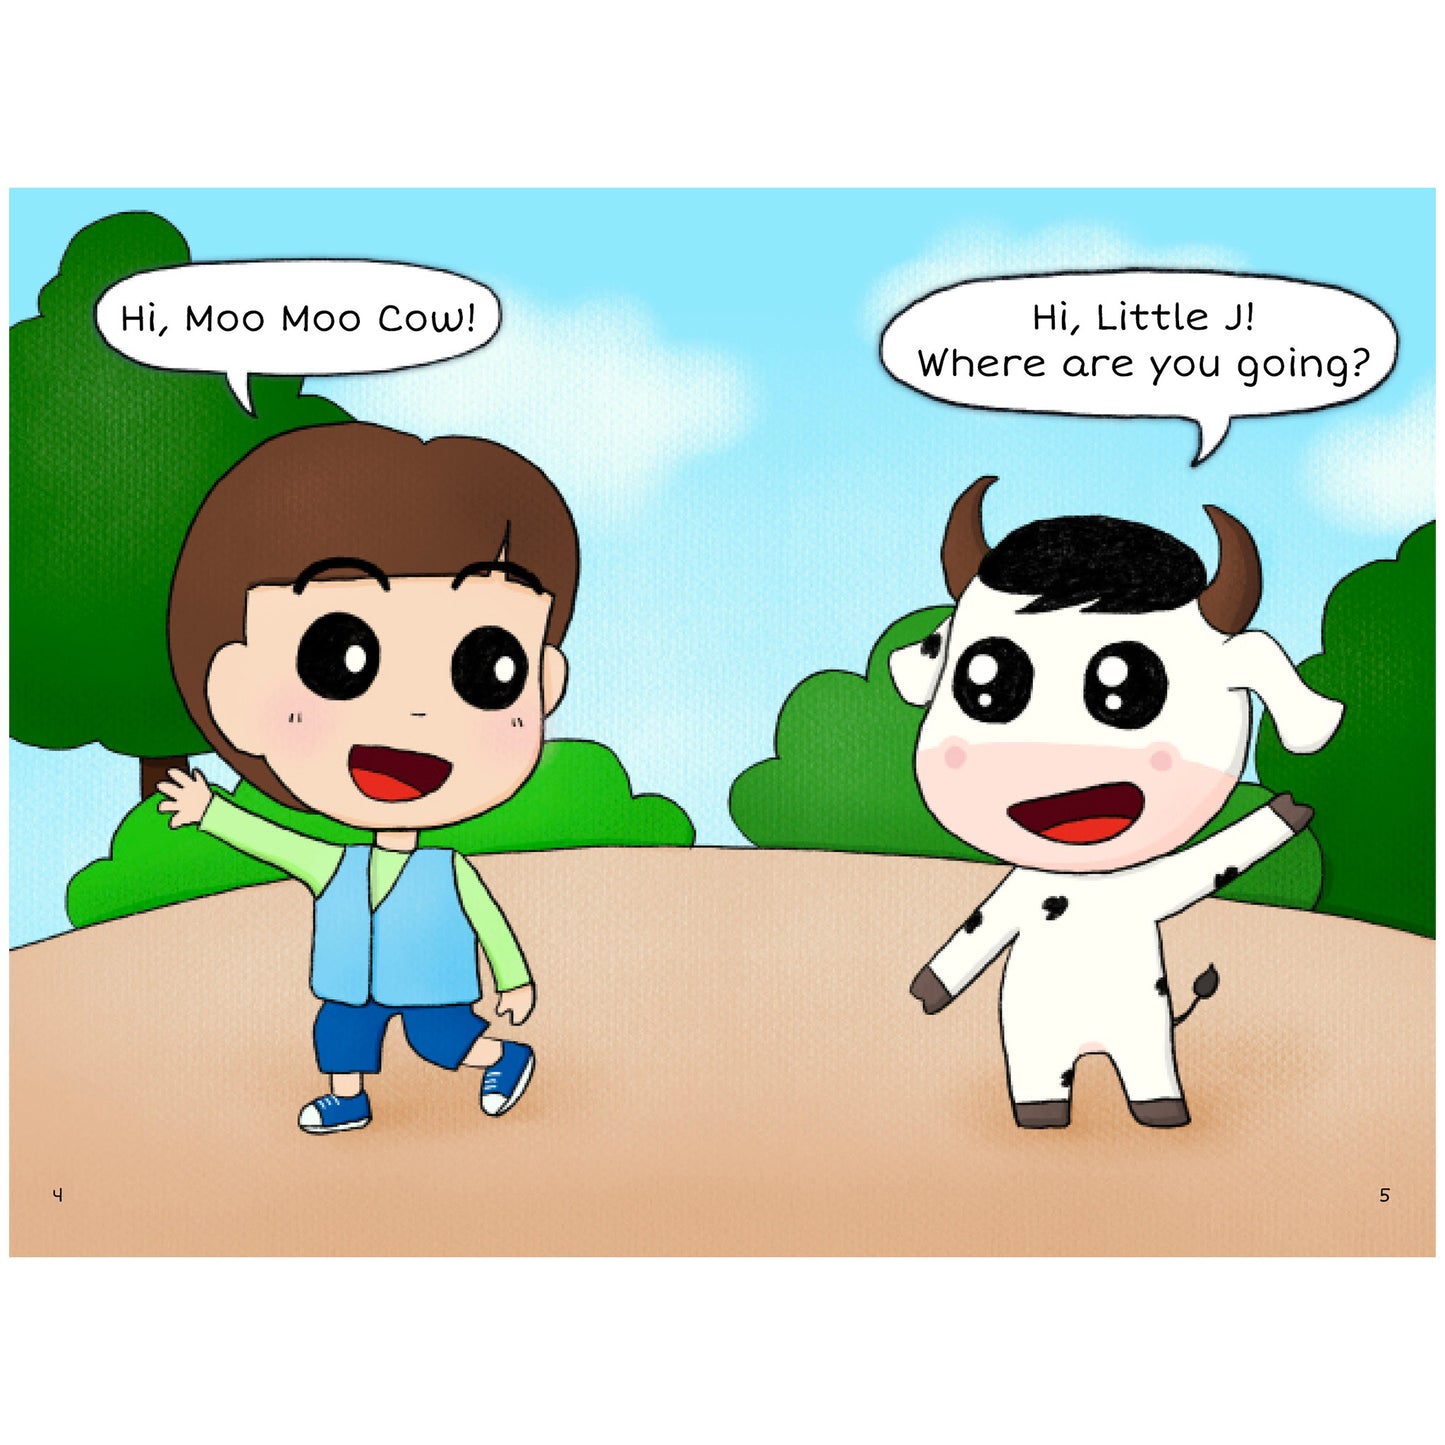 Moo Moo Cow Loves to Help